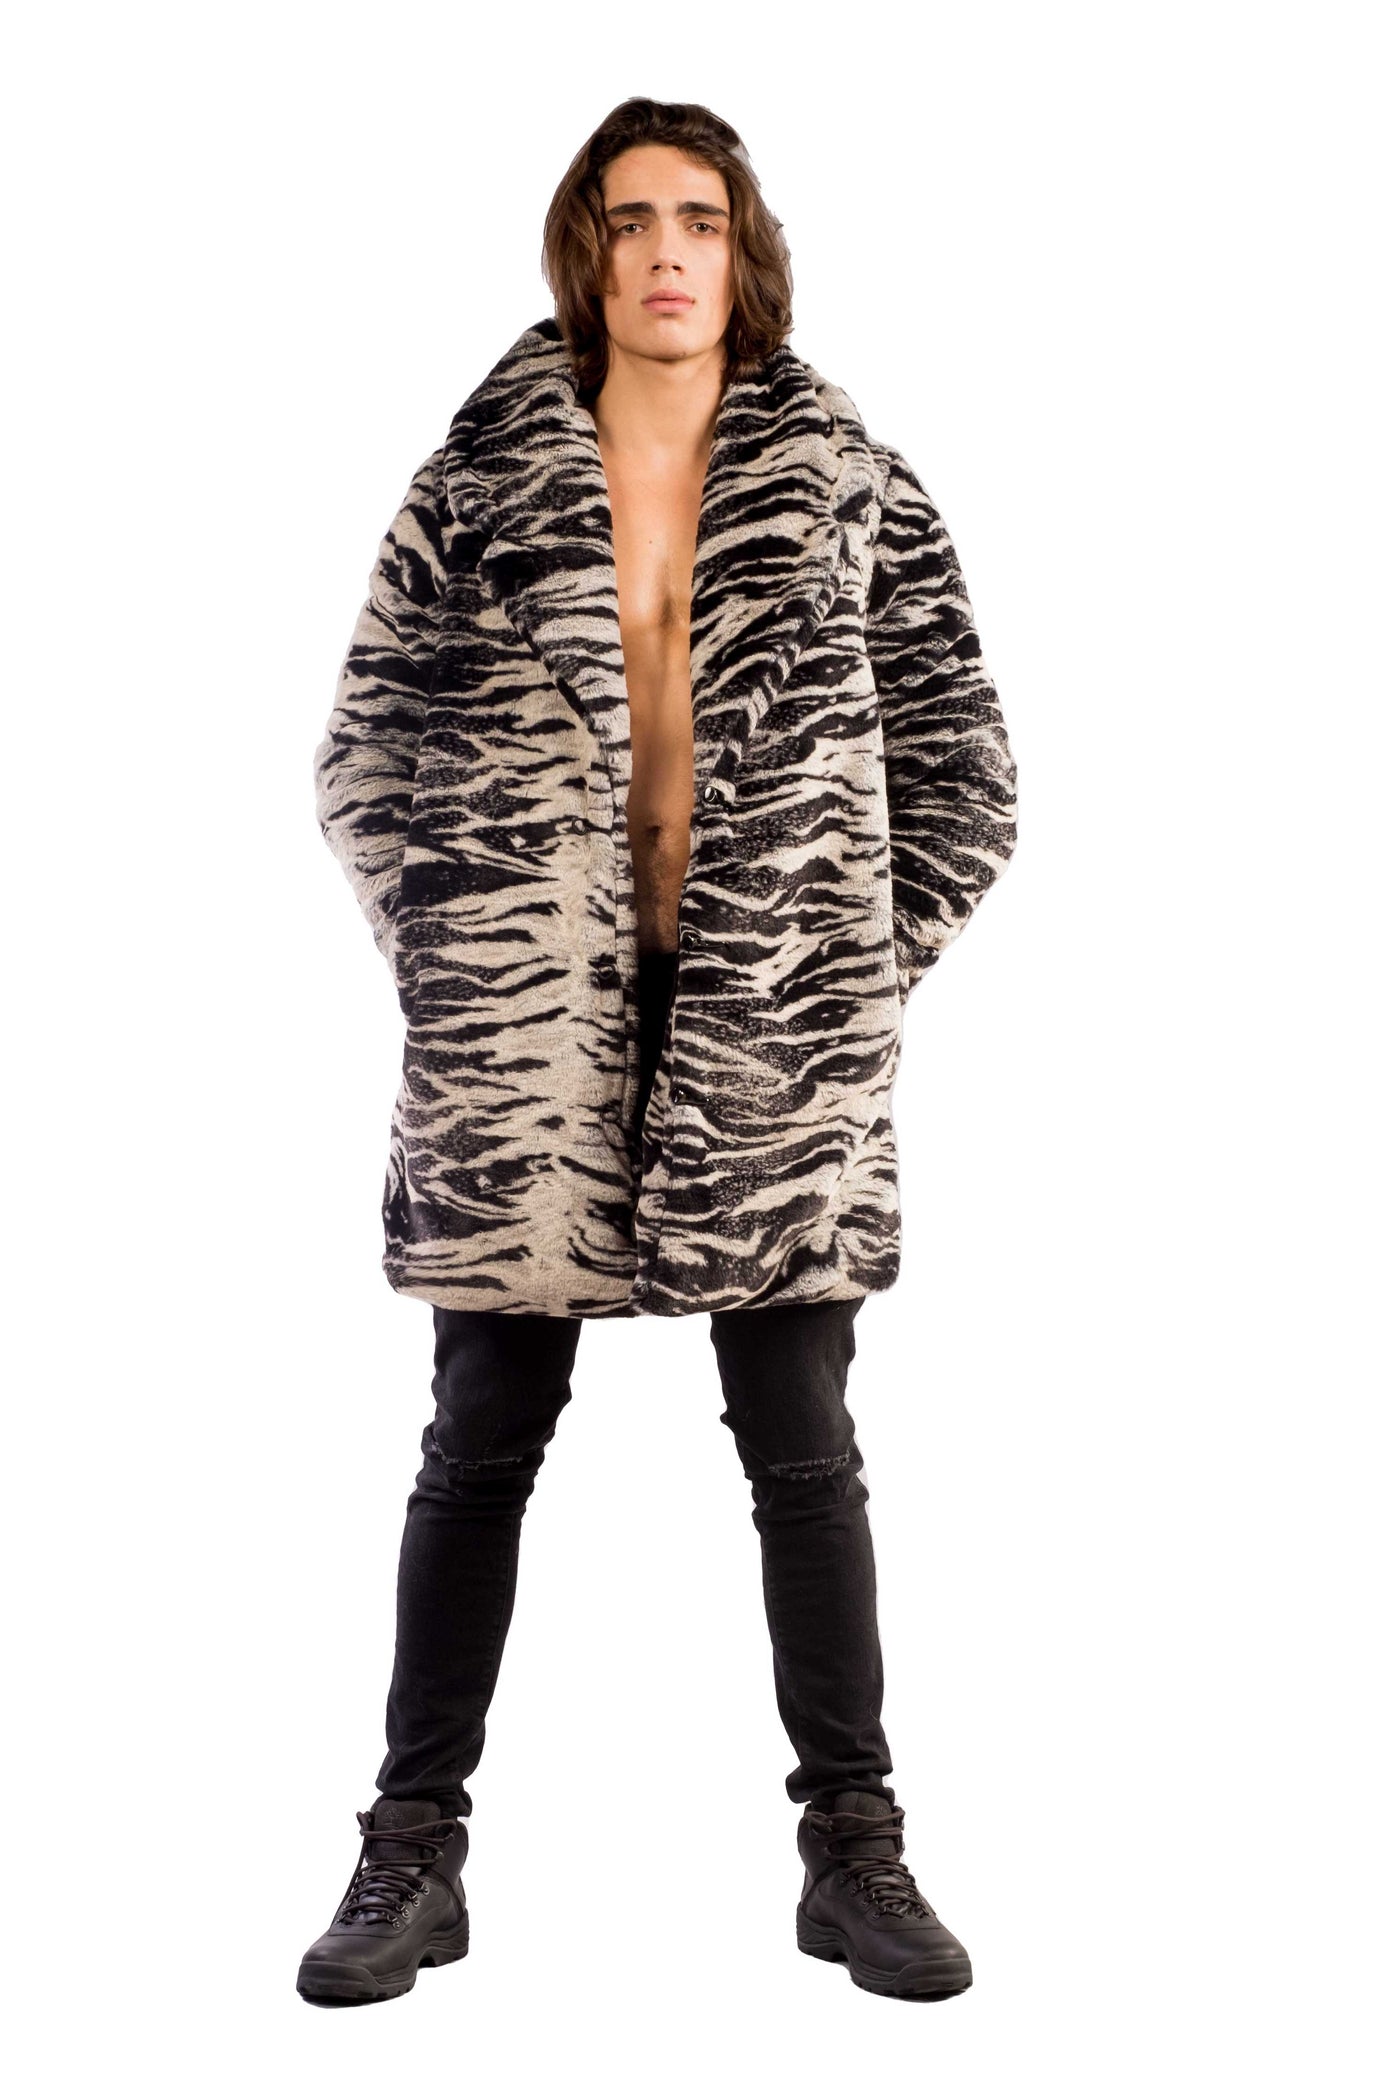 Men's Long Cozy Coat in "Natural Tiger"